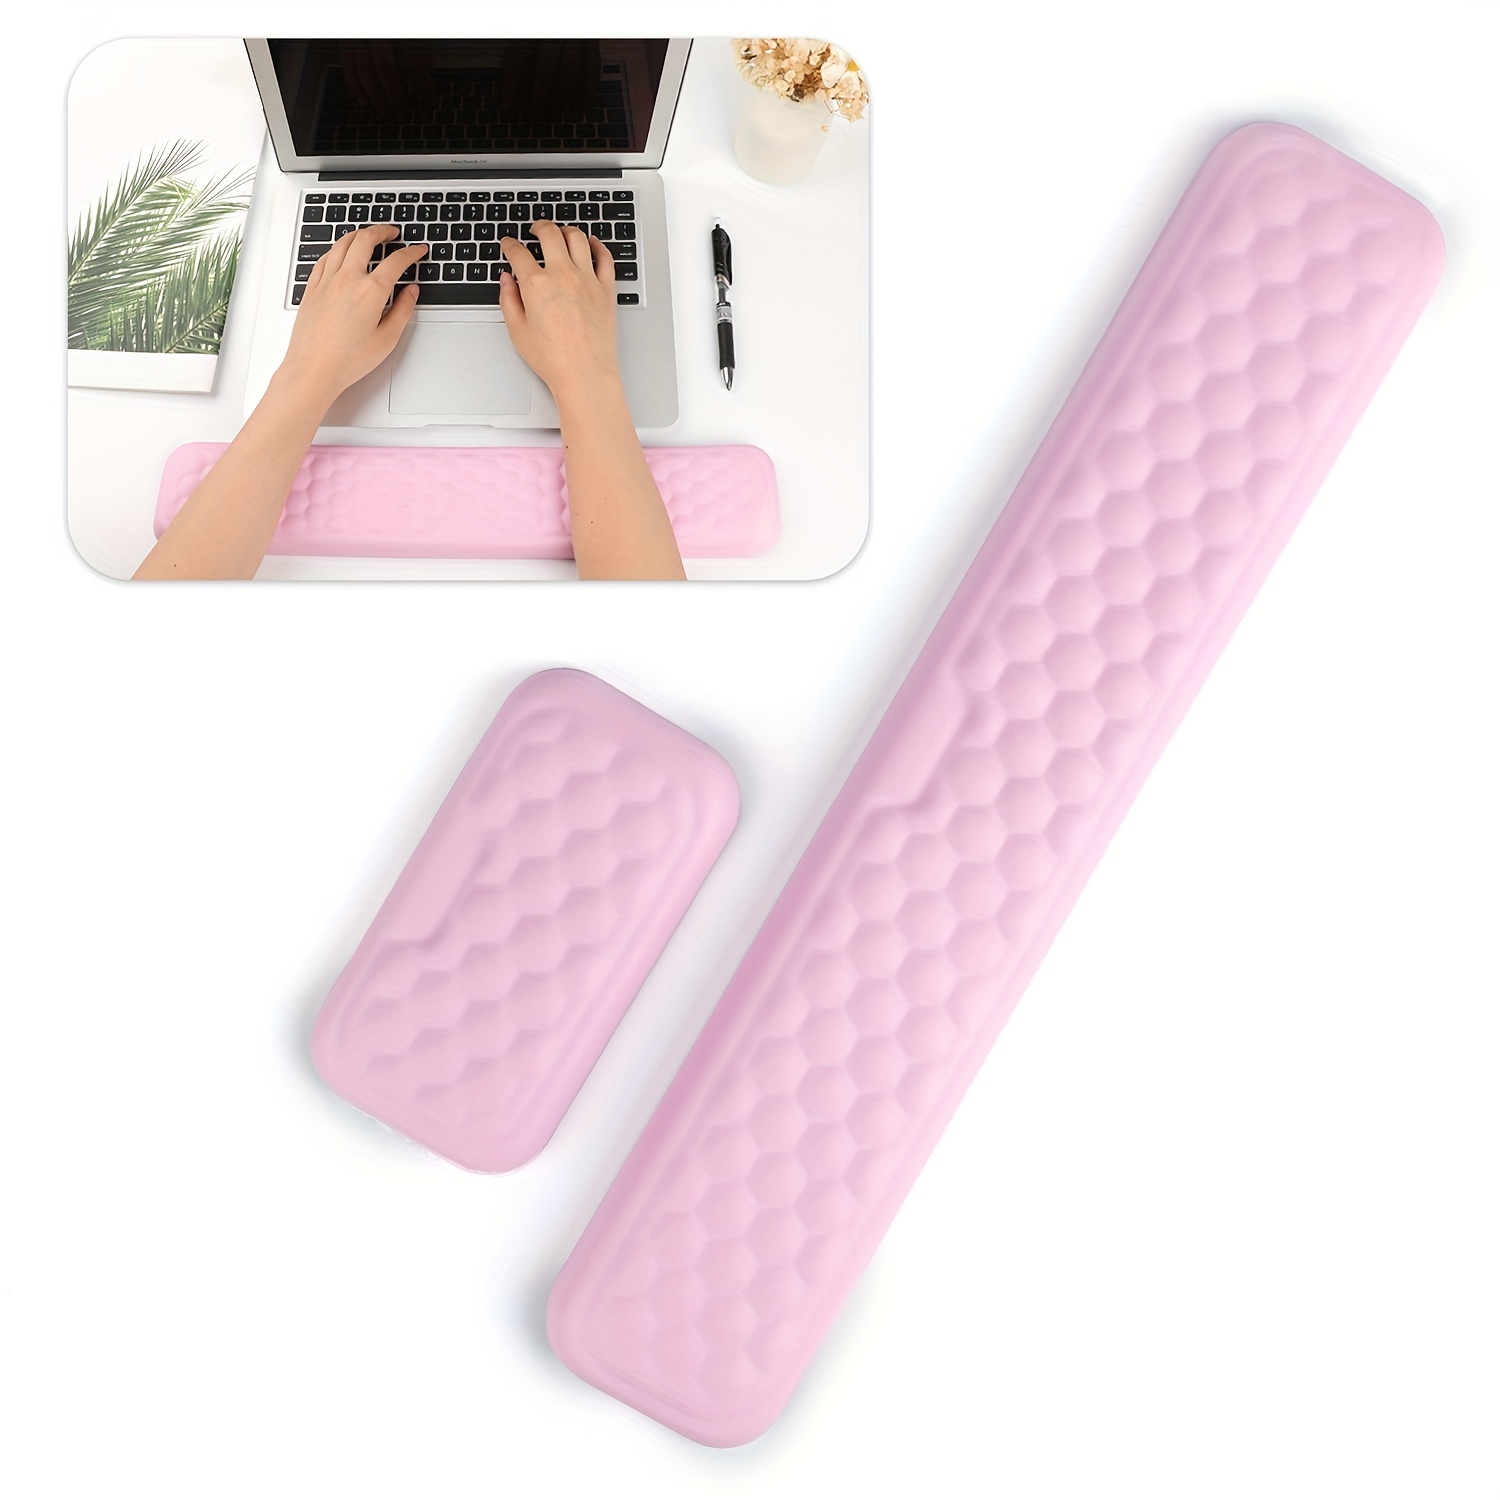 Aelfox Memory Foam Keyboard Wrist Rest&Mouse Wrist Rest, Ergonomic Design  Wrist Pad for Computer Keyboard Laptop Wrist Support, Arm Rest for Desk